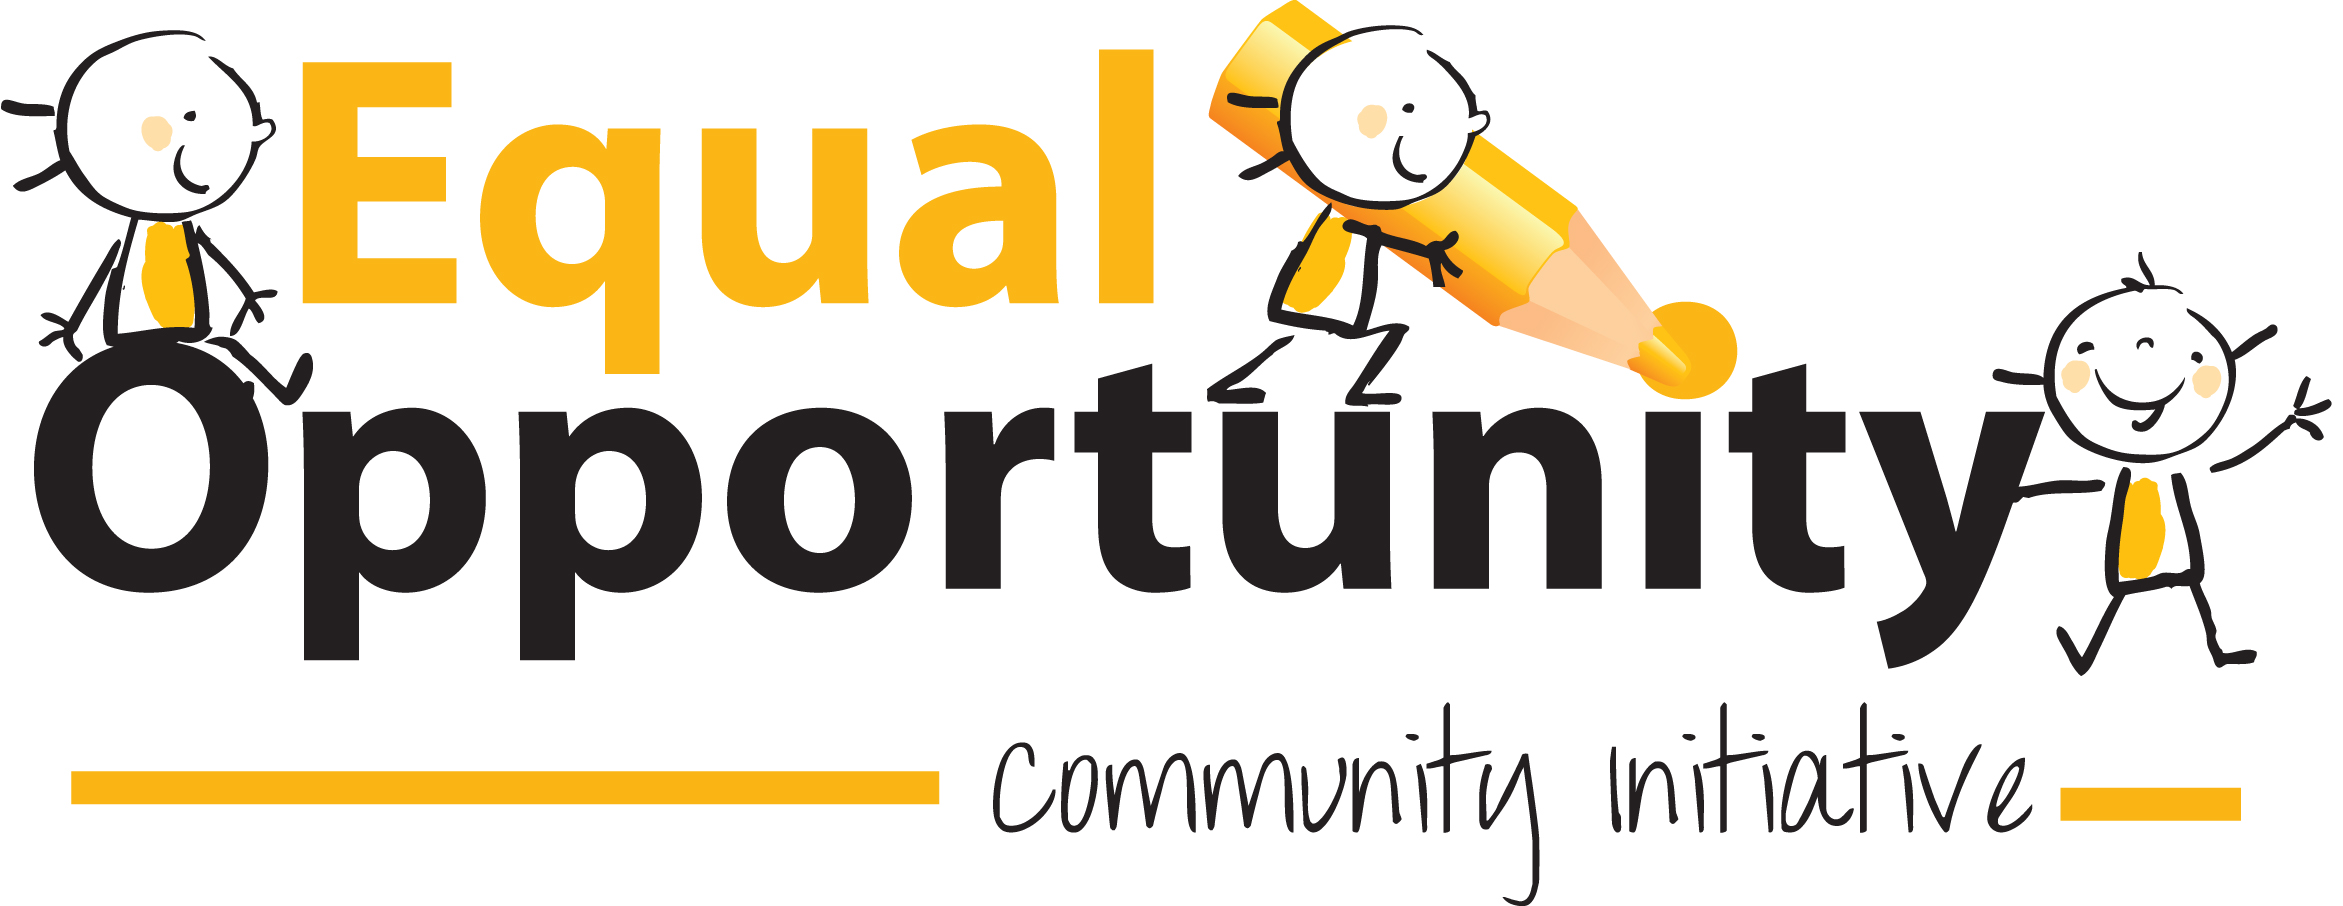 Equal Opportunity Community Initiative logo